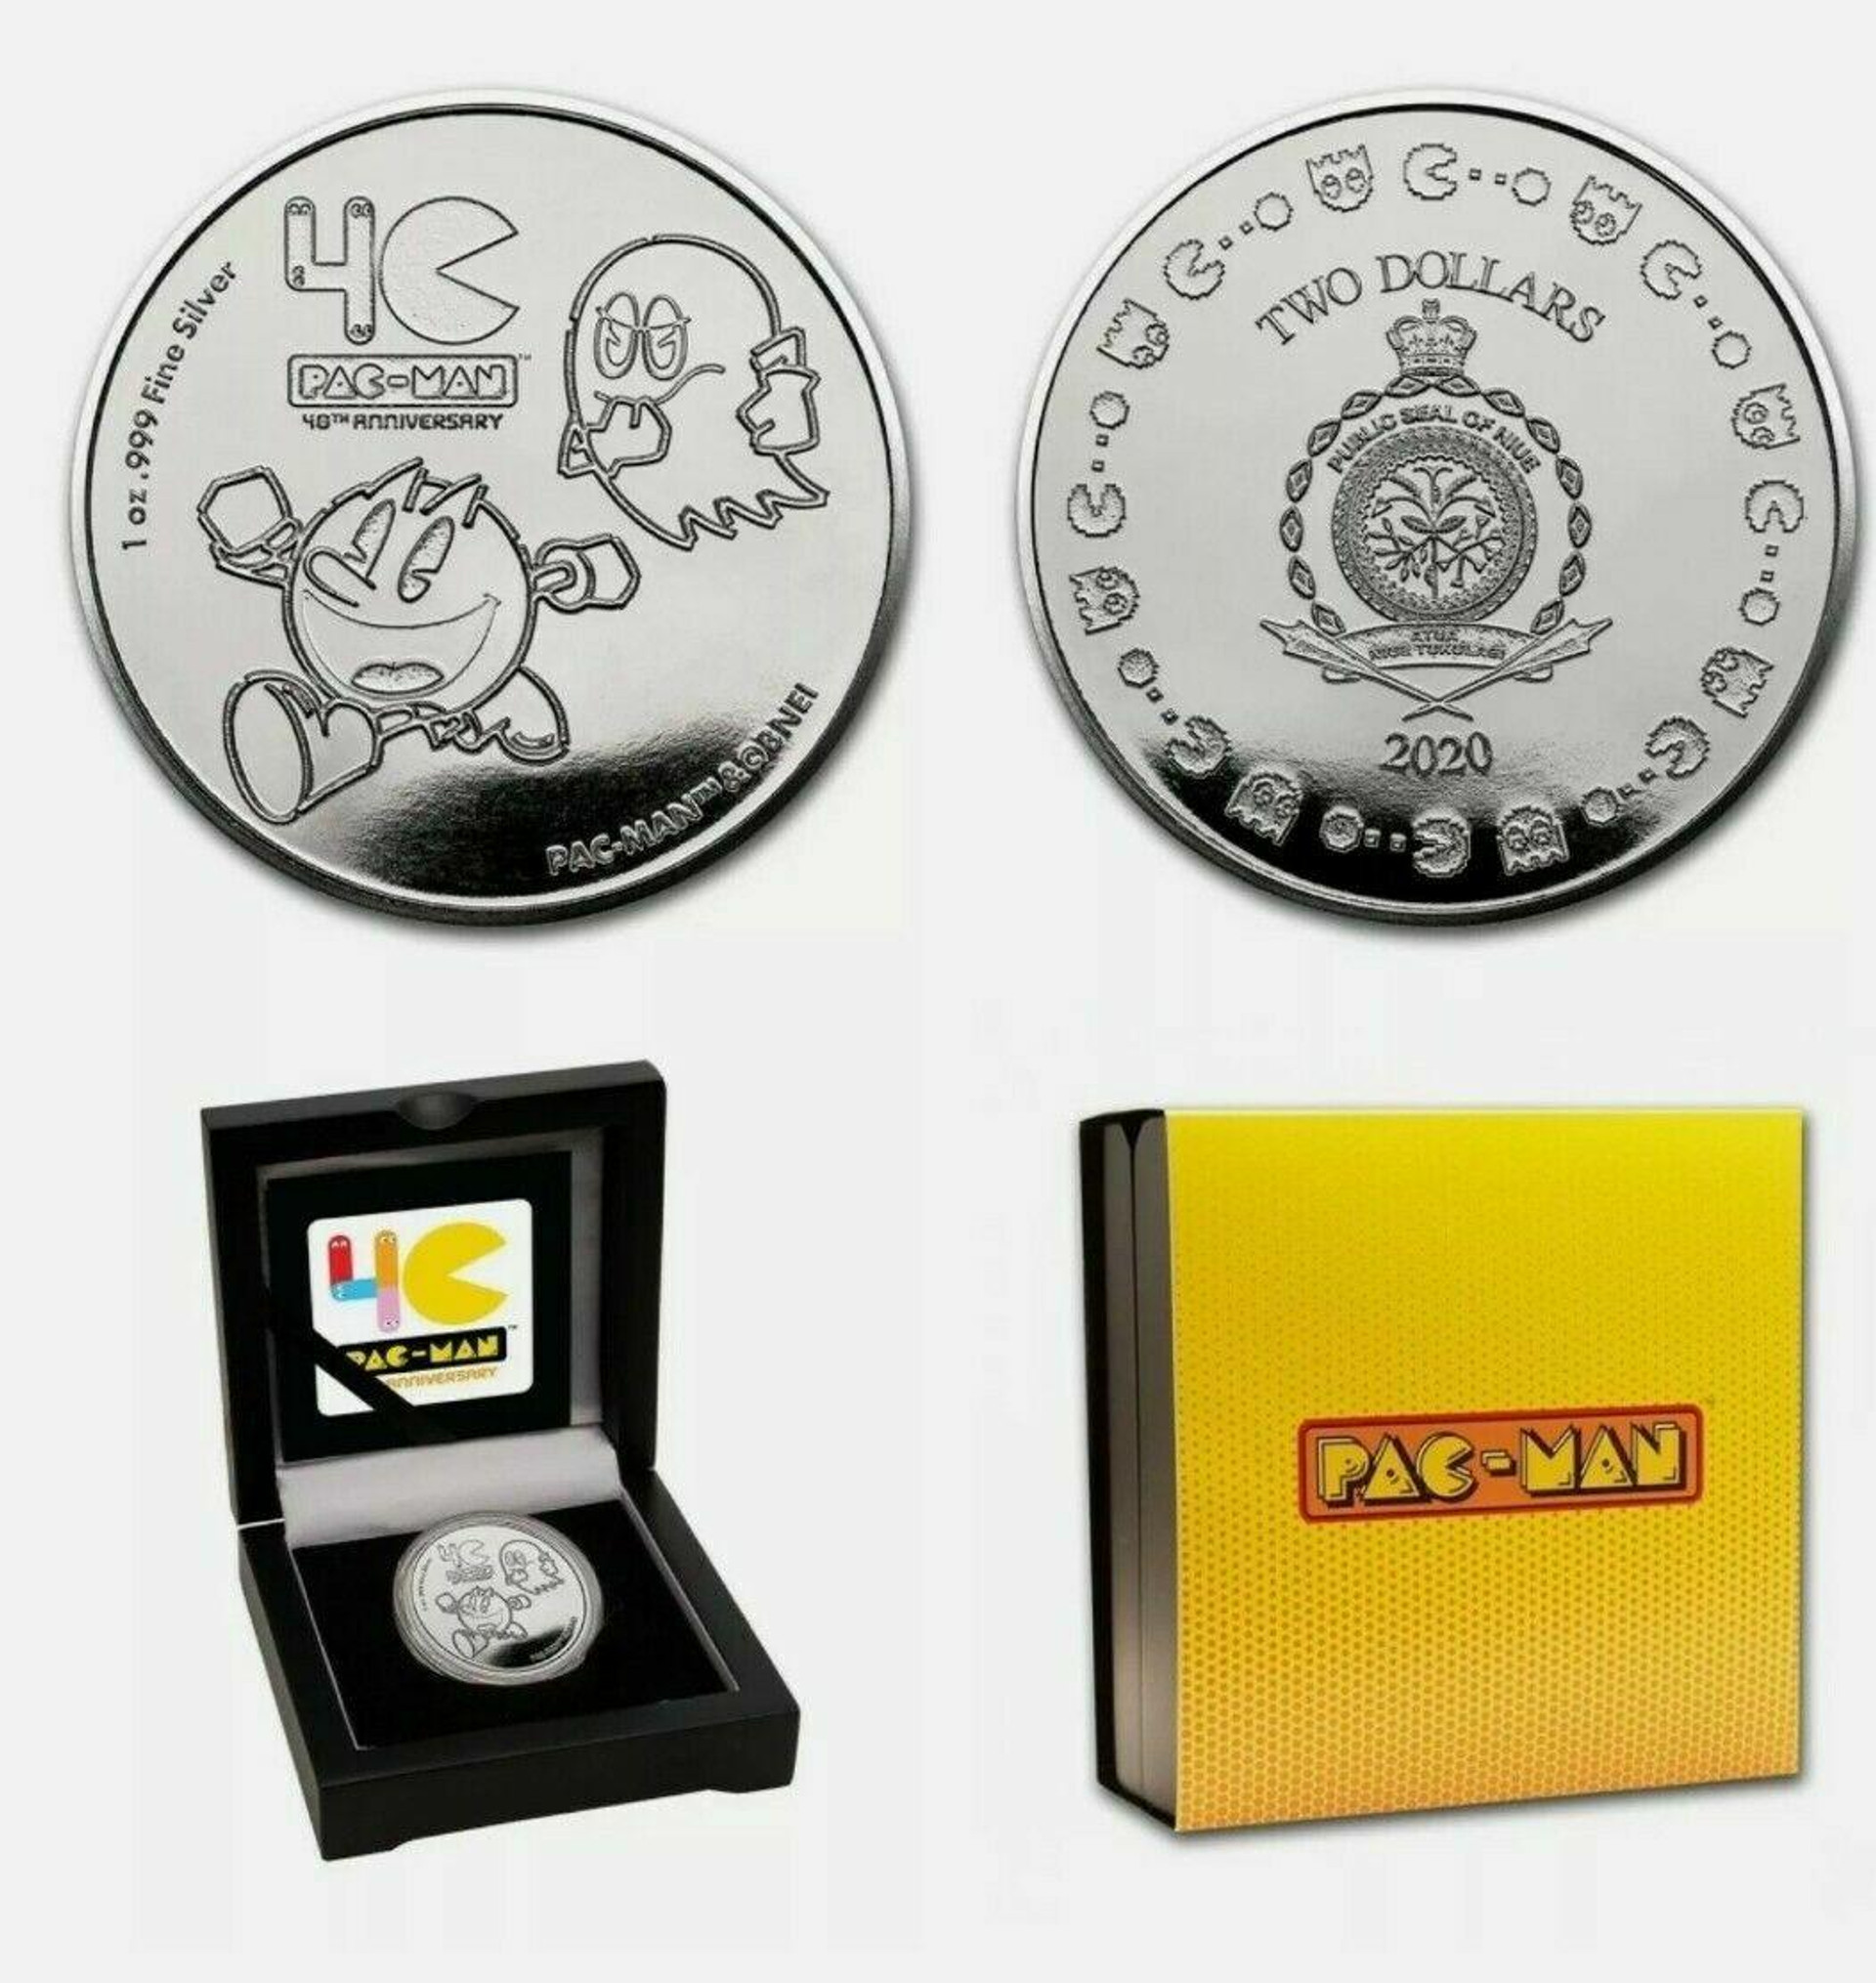 pac man 30th anniversary insert coin